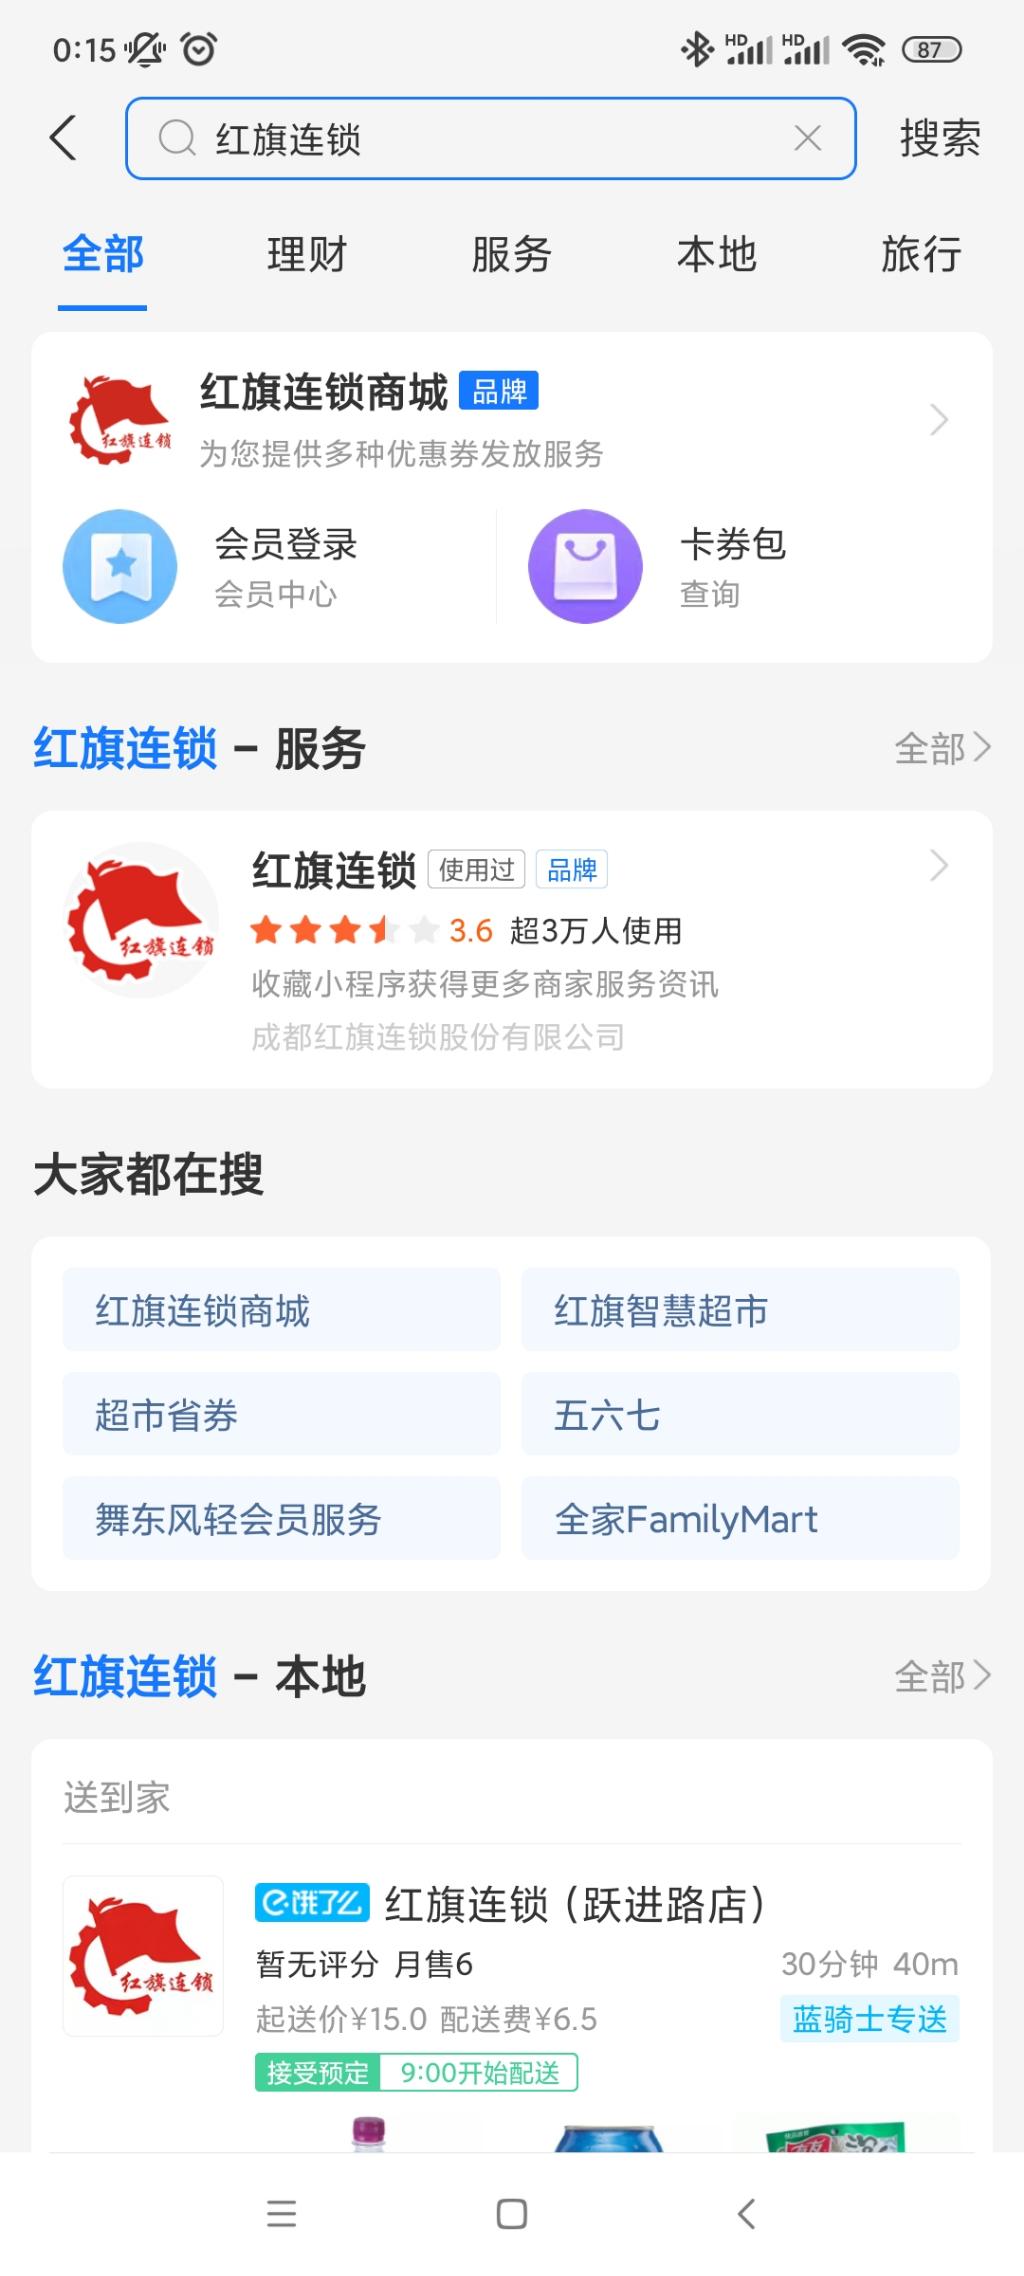 ZFB红旗连锁超市1元商品券-惠小助(52huixz.com)